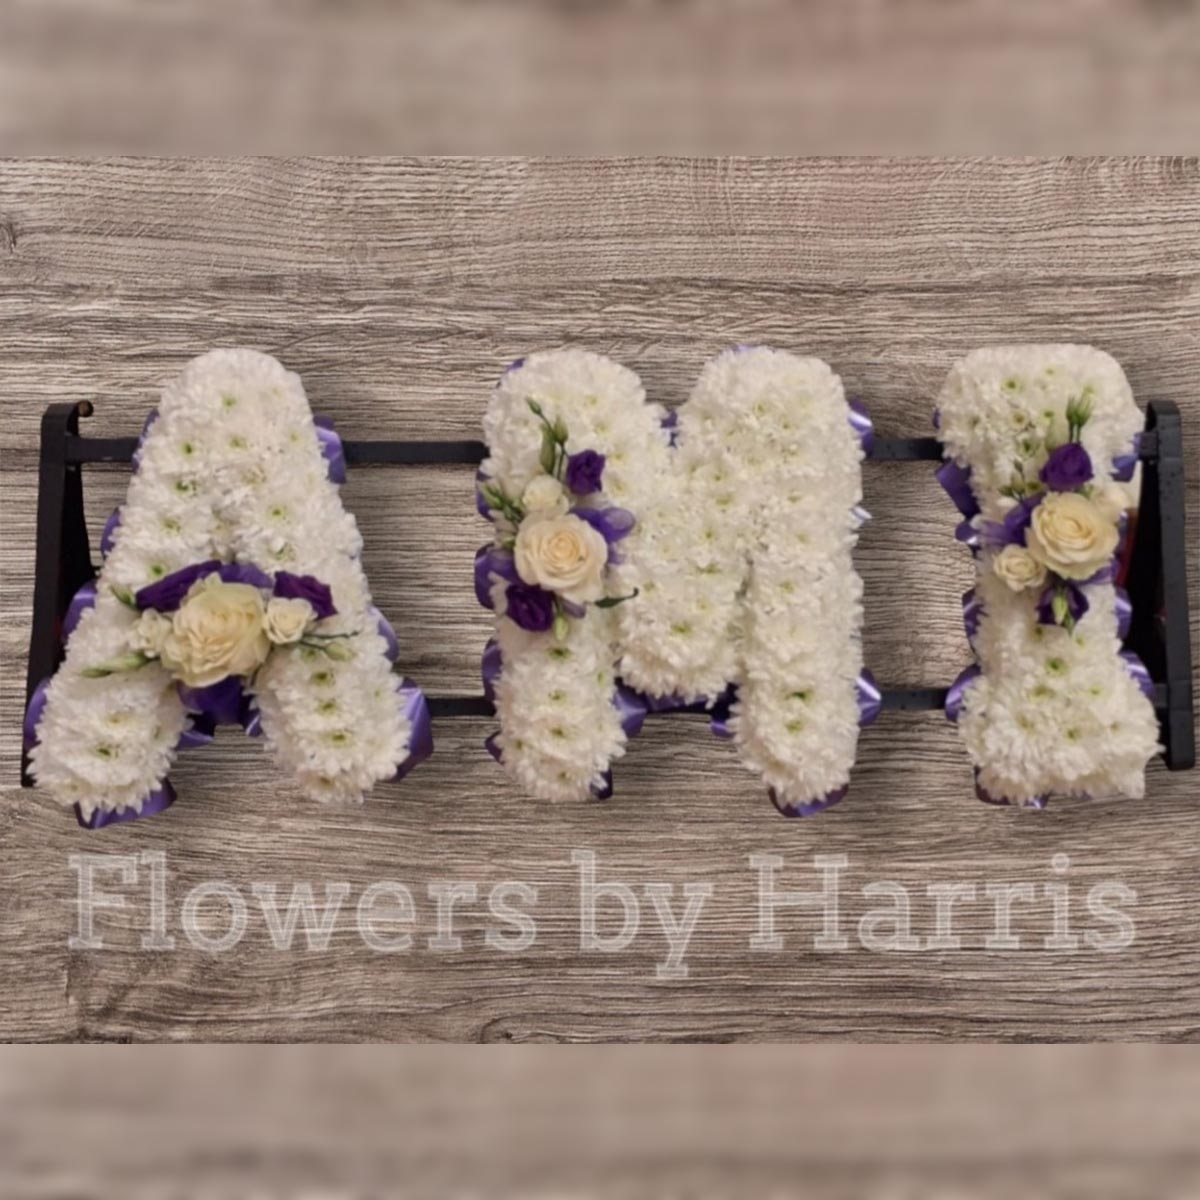 Ami tribute Flower Arrangement